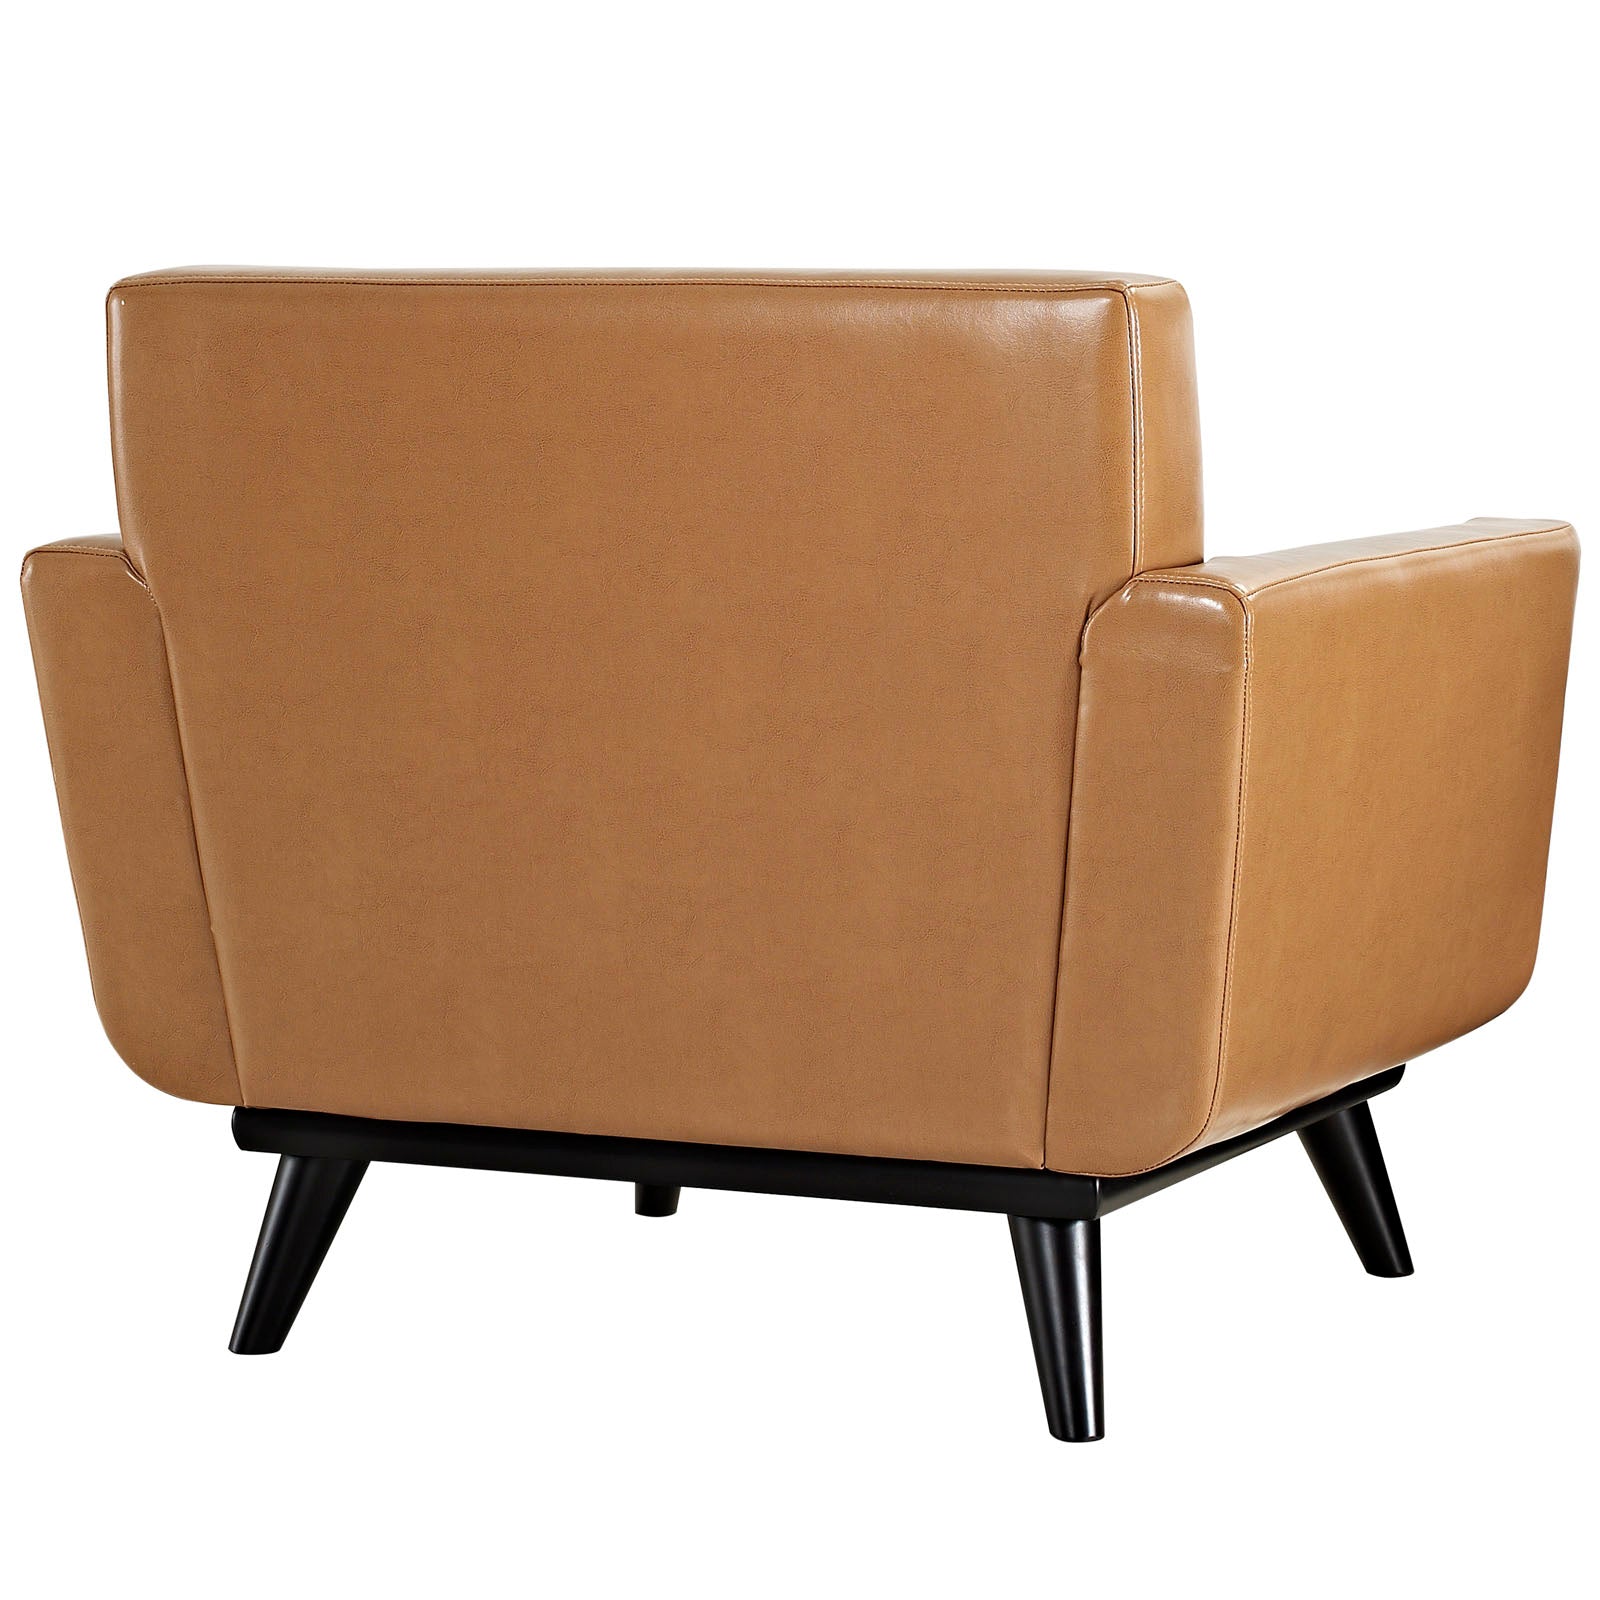 Modway Living Room Sets - Engage Leather Sofa Set Tan